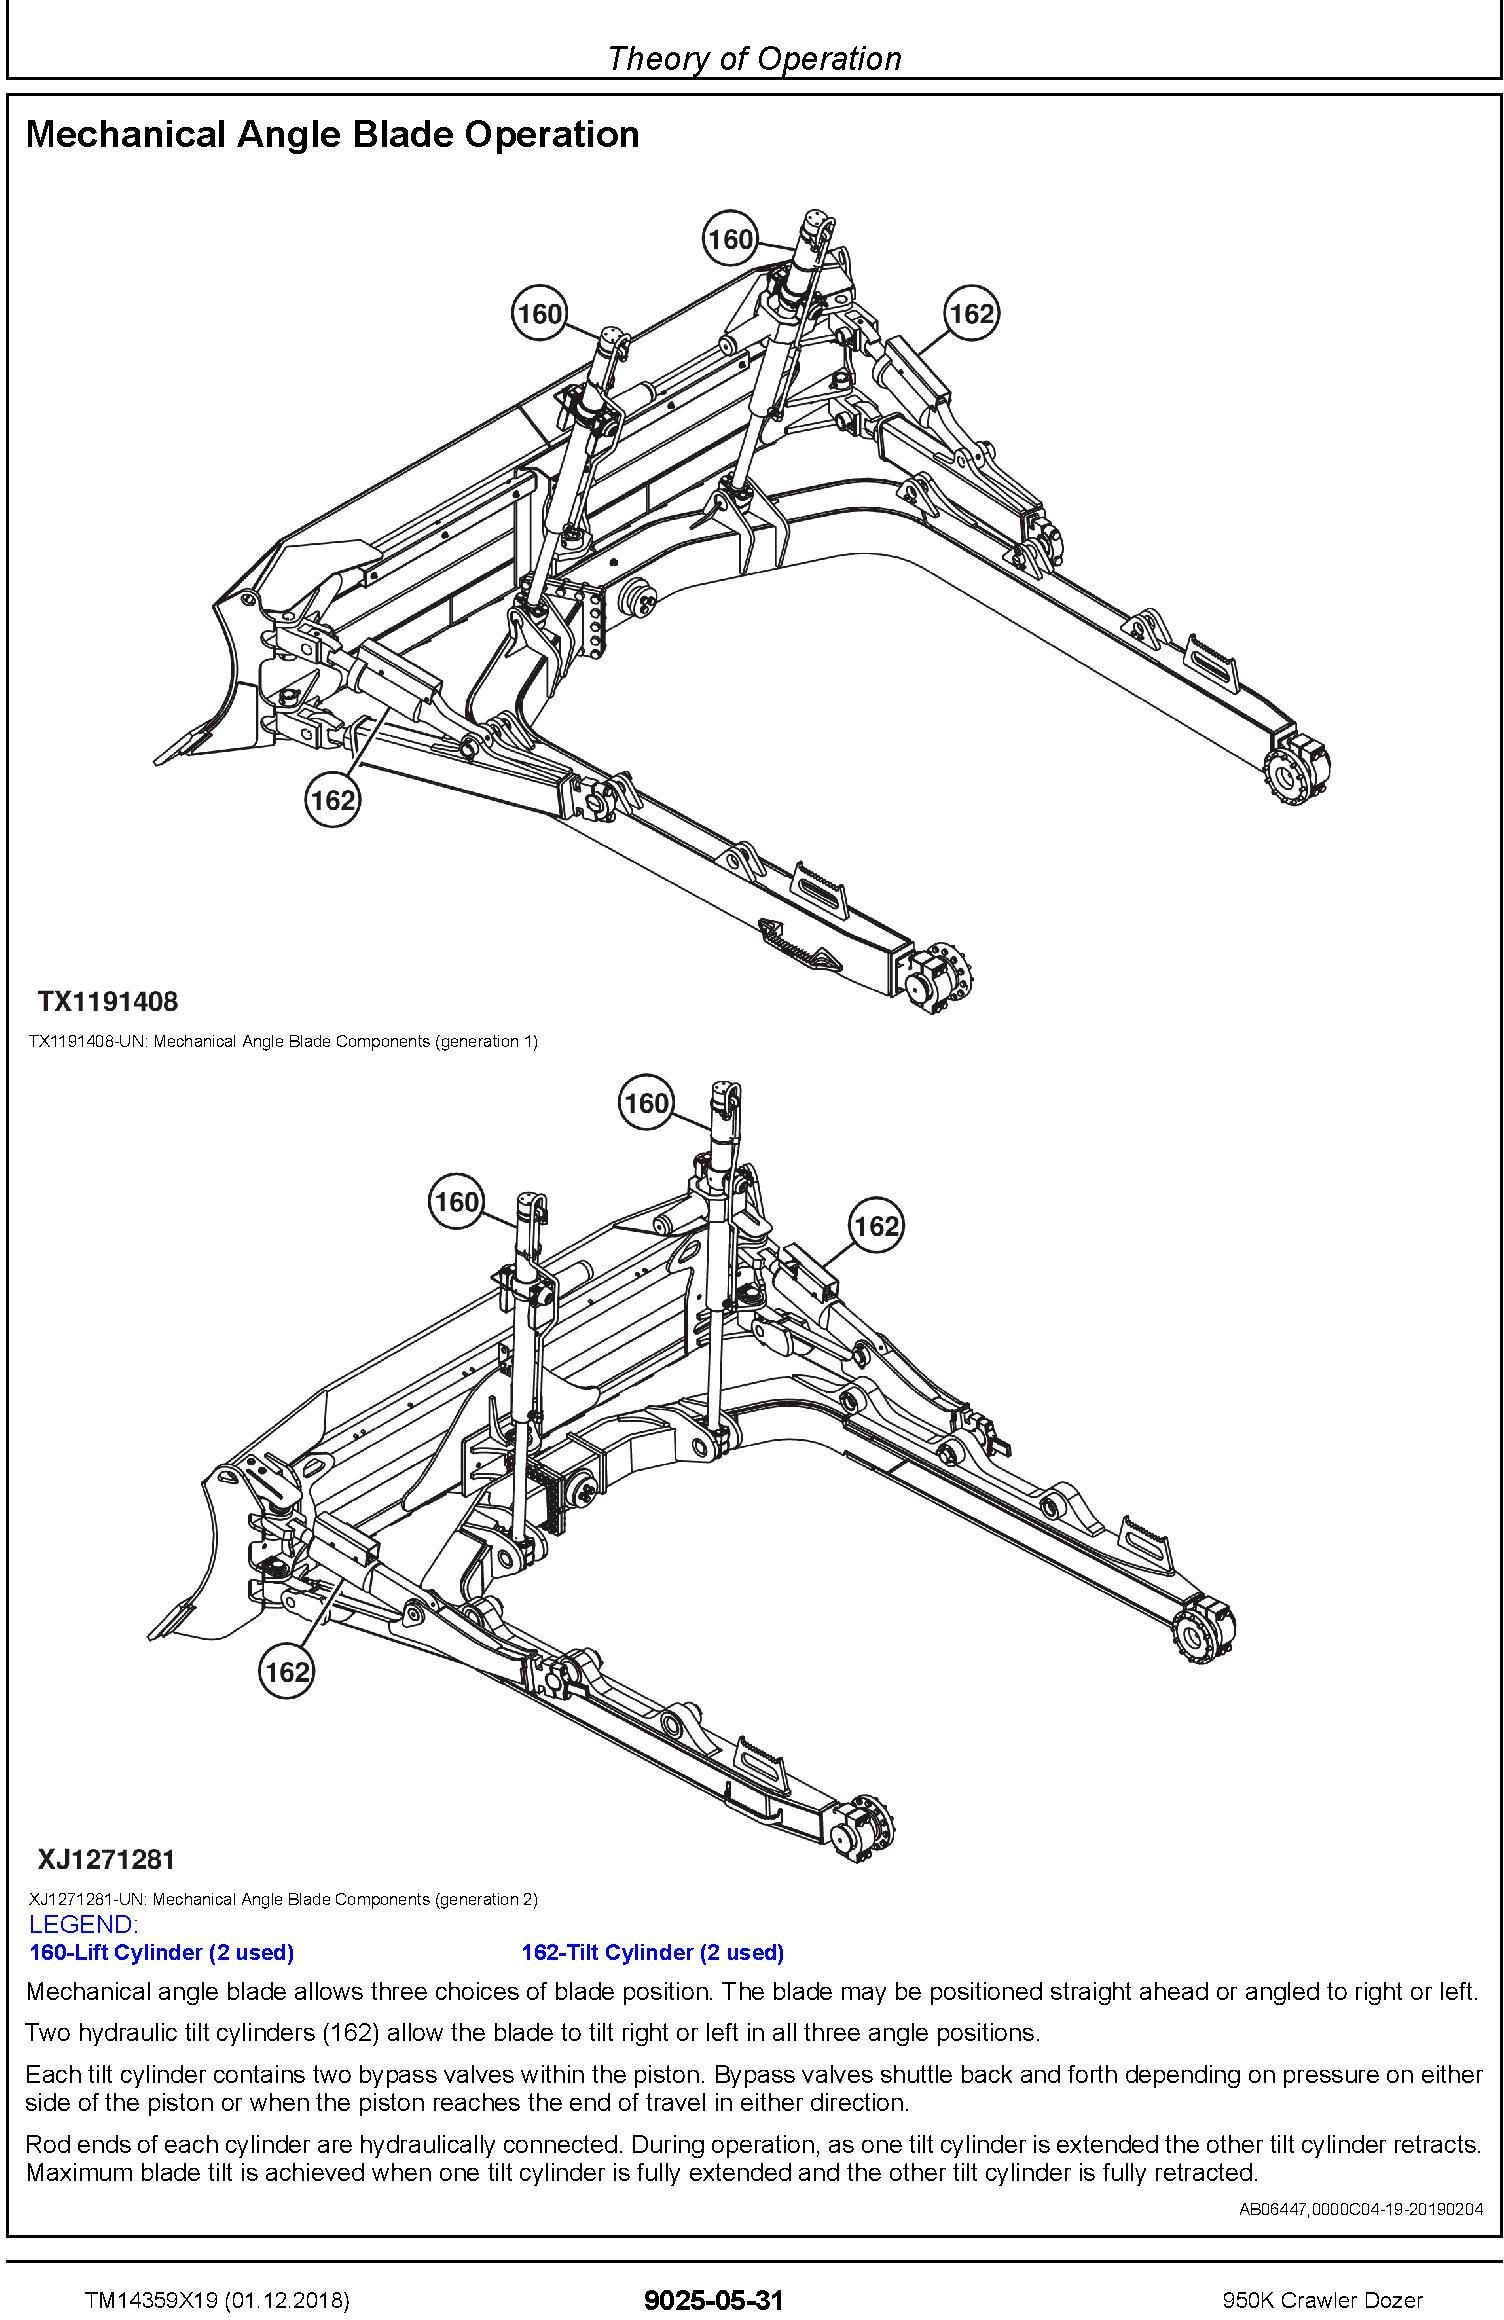 John Deere 950K Crawler Dozer Operation & Test Technical Manual (TM14359X19) - 3